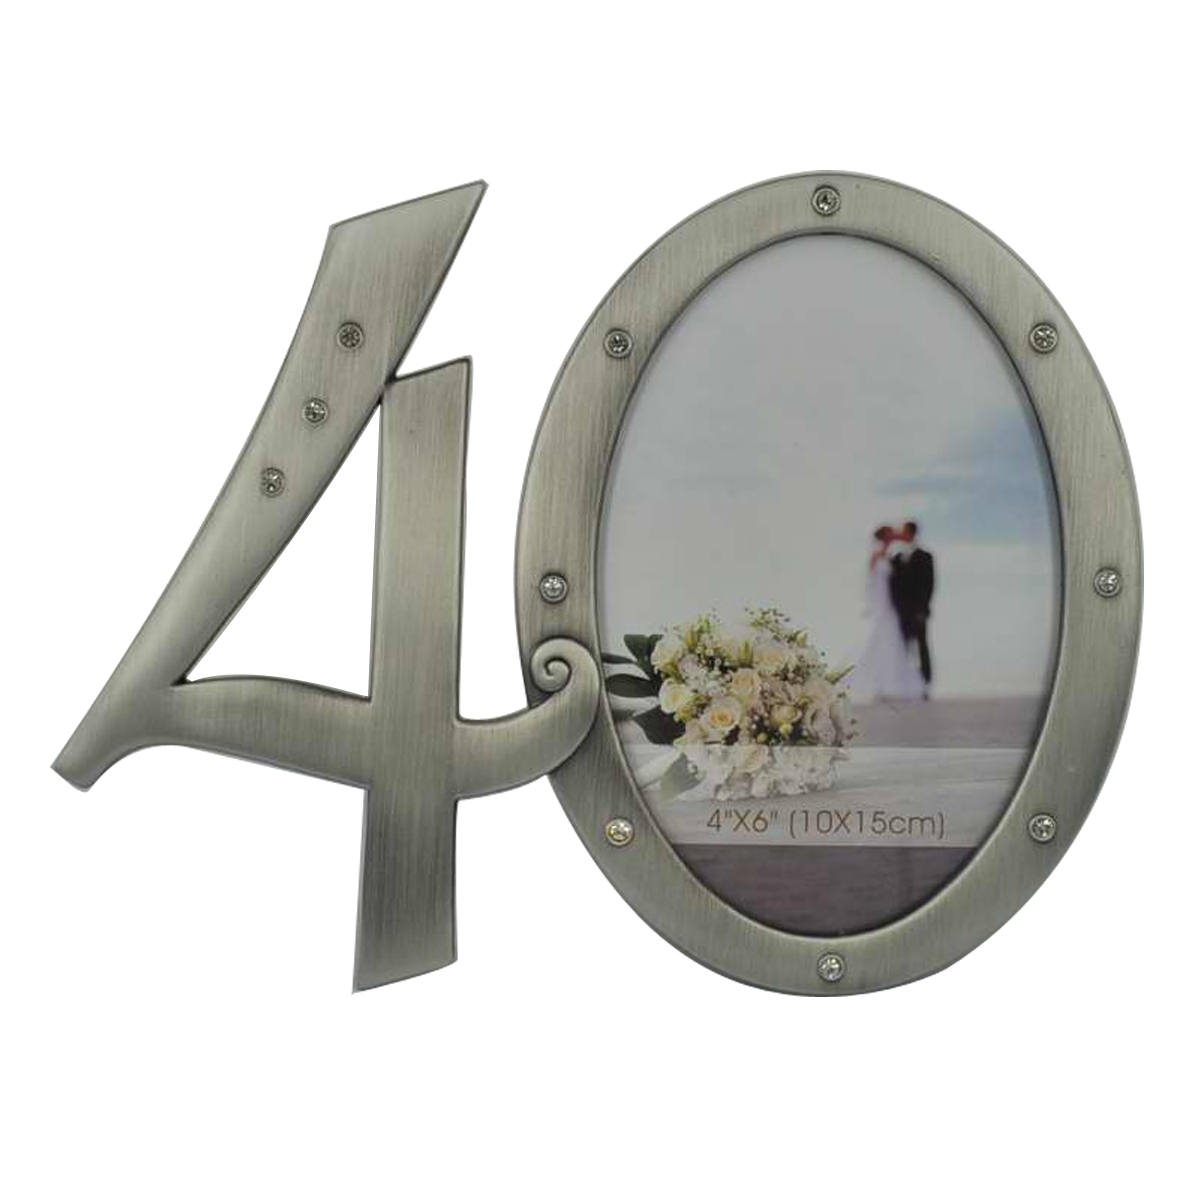 "40" memory photo frame